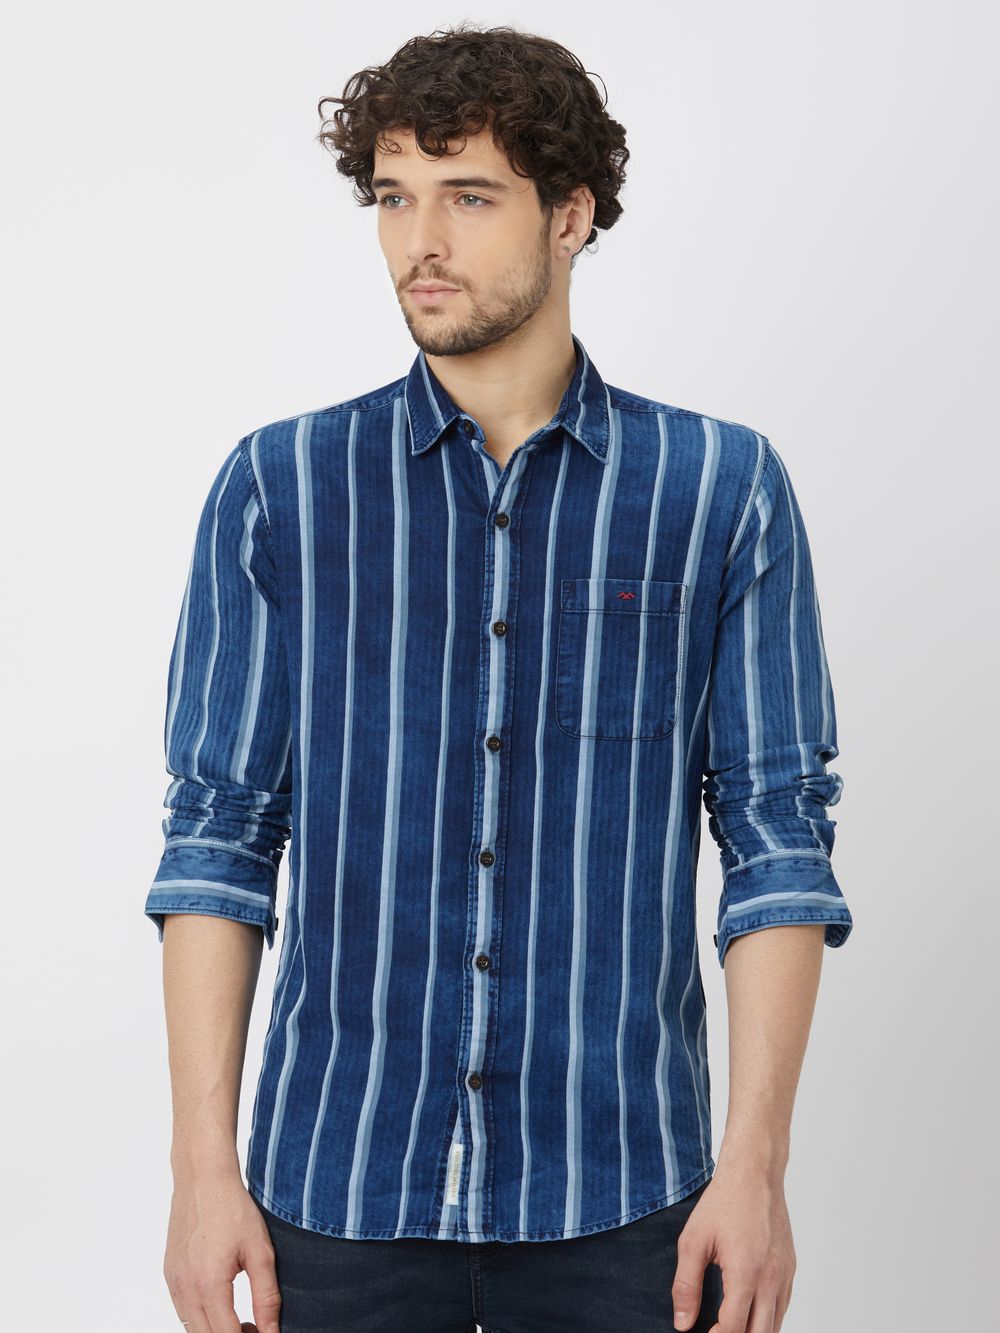 Indigo Blue & White Tonal Stripe Shirt